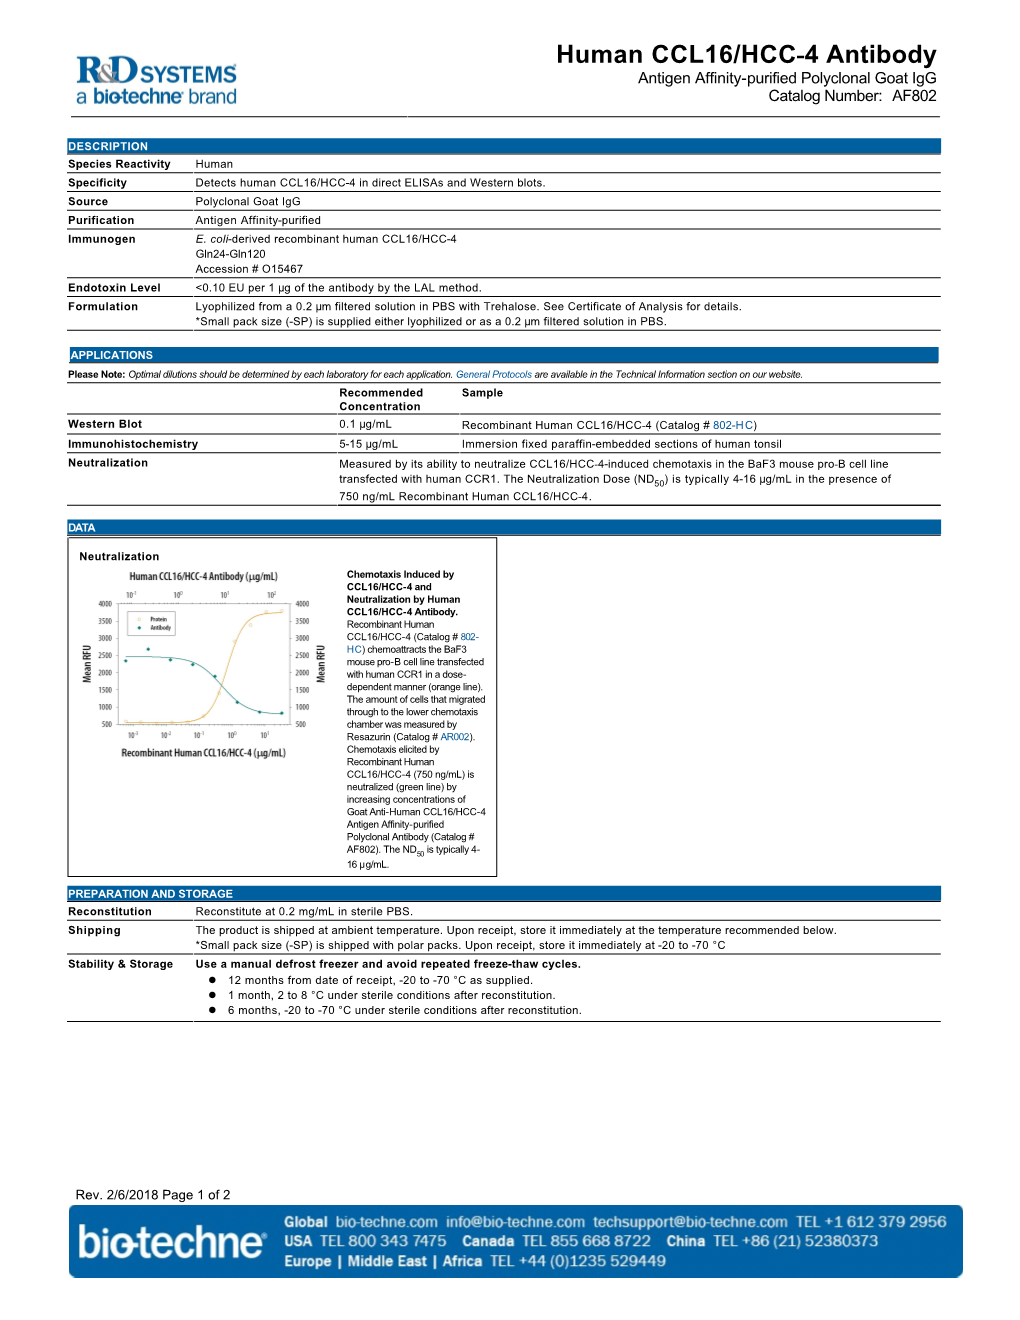 Human CCL16/HCC-4 Antibody Antigen Affinity-Purified Polyclonal Goat Igg Catalog Number: AF802